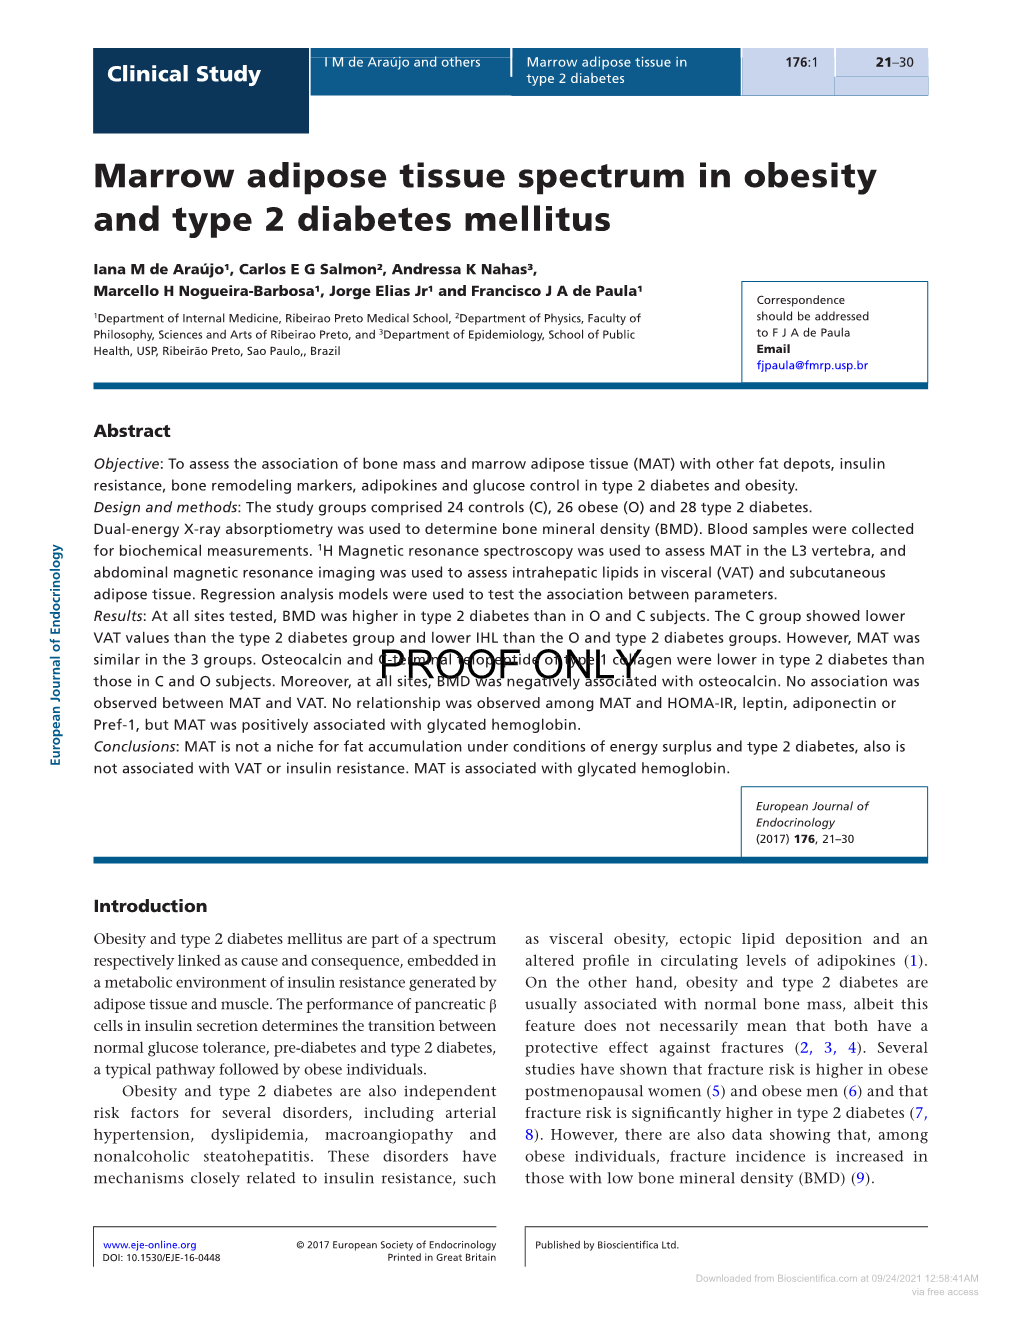 Marrow Adipose Tissue Spectrum in Obesity and Type 2 Diabetes Mellitus